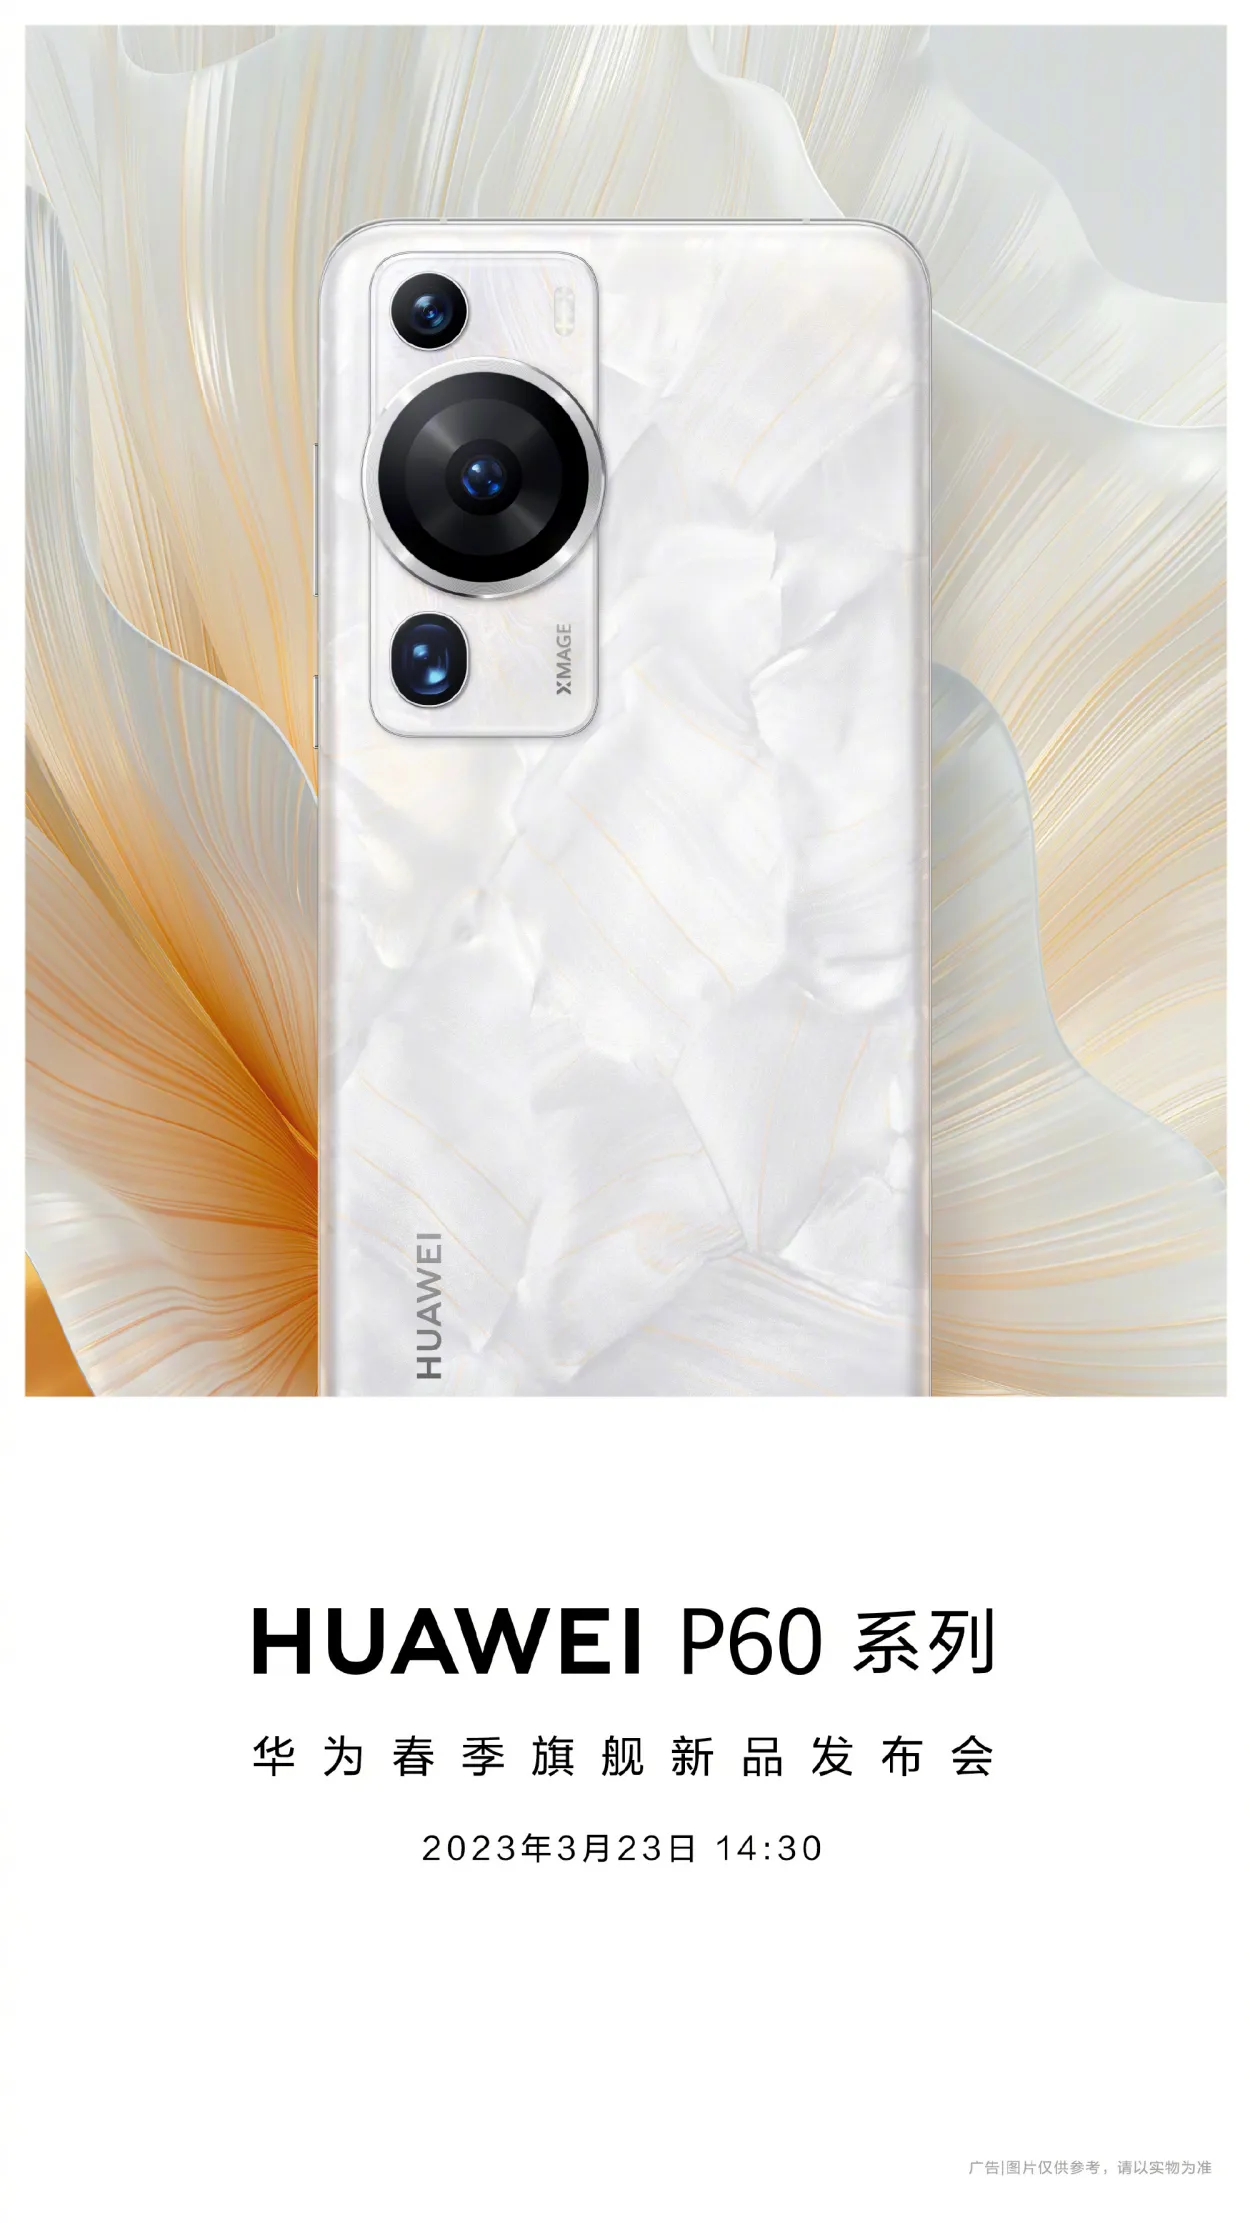 huawei p60 pro 発売日